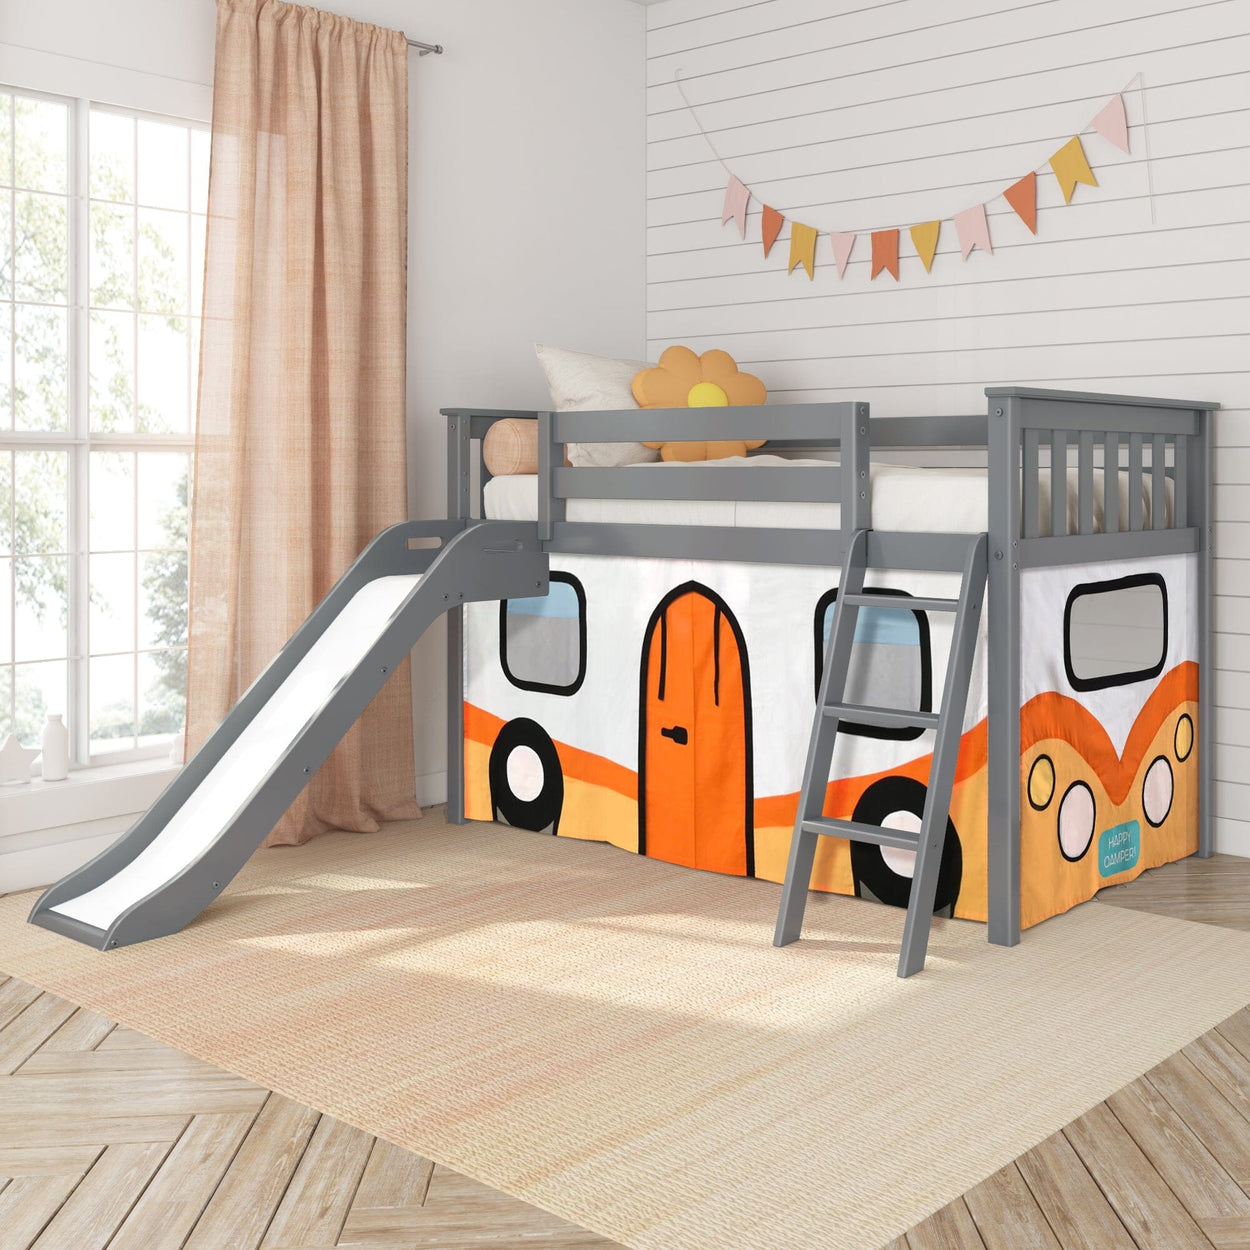 180413121067 : Loft Beds Low Loft with Easy Slide and Orange Camper Van Curtain, Grey